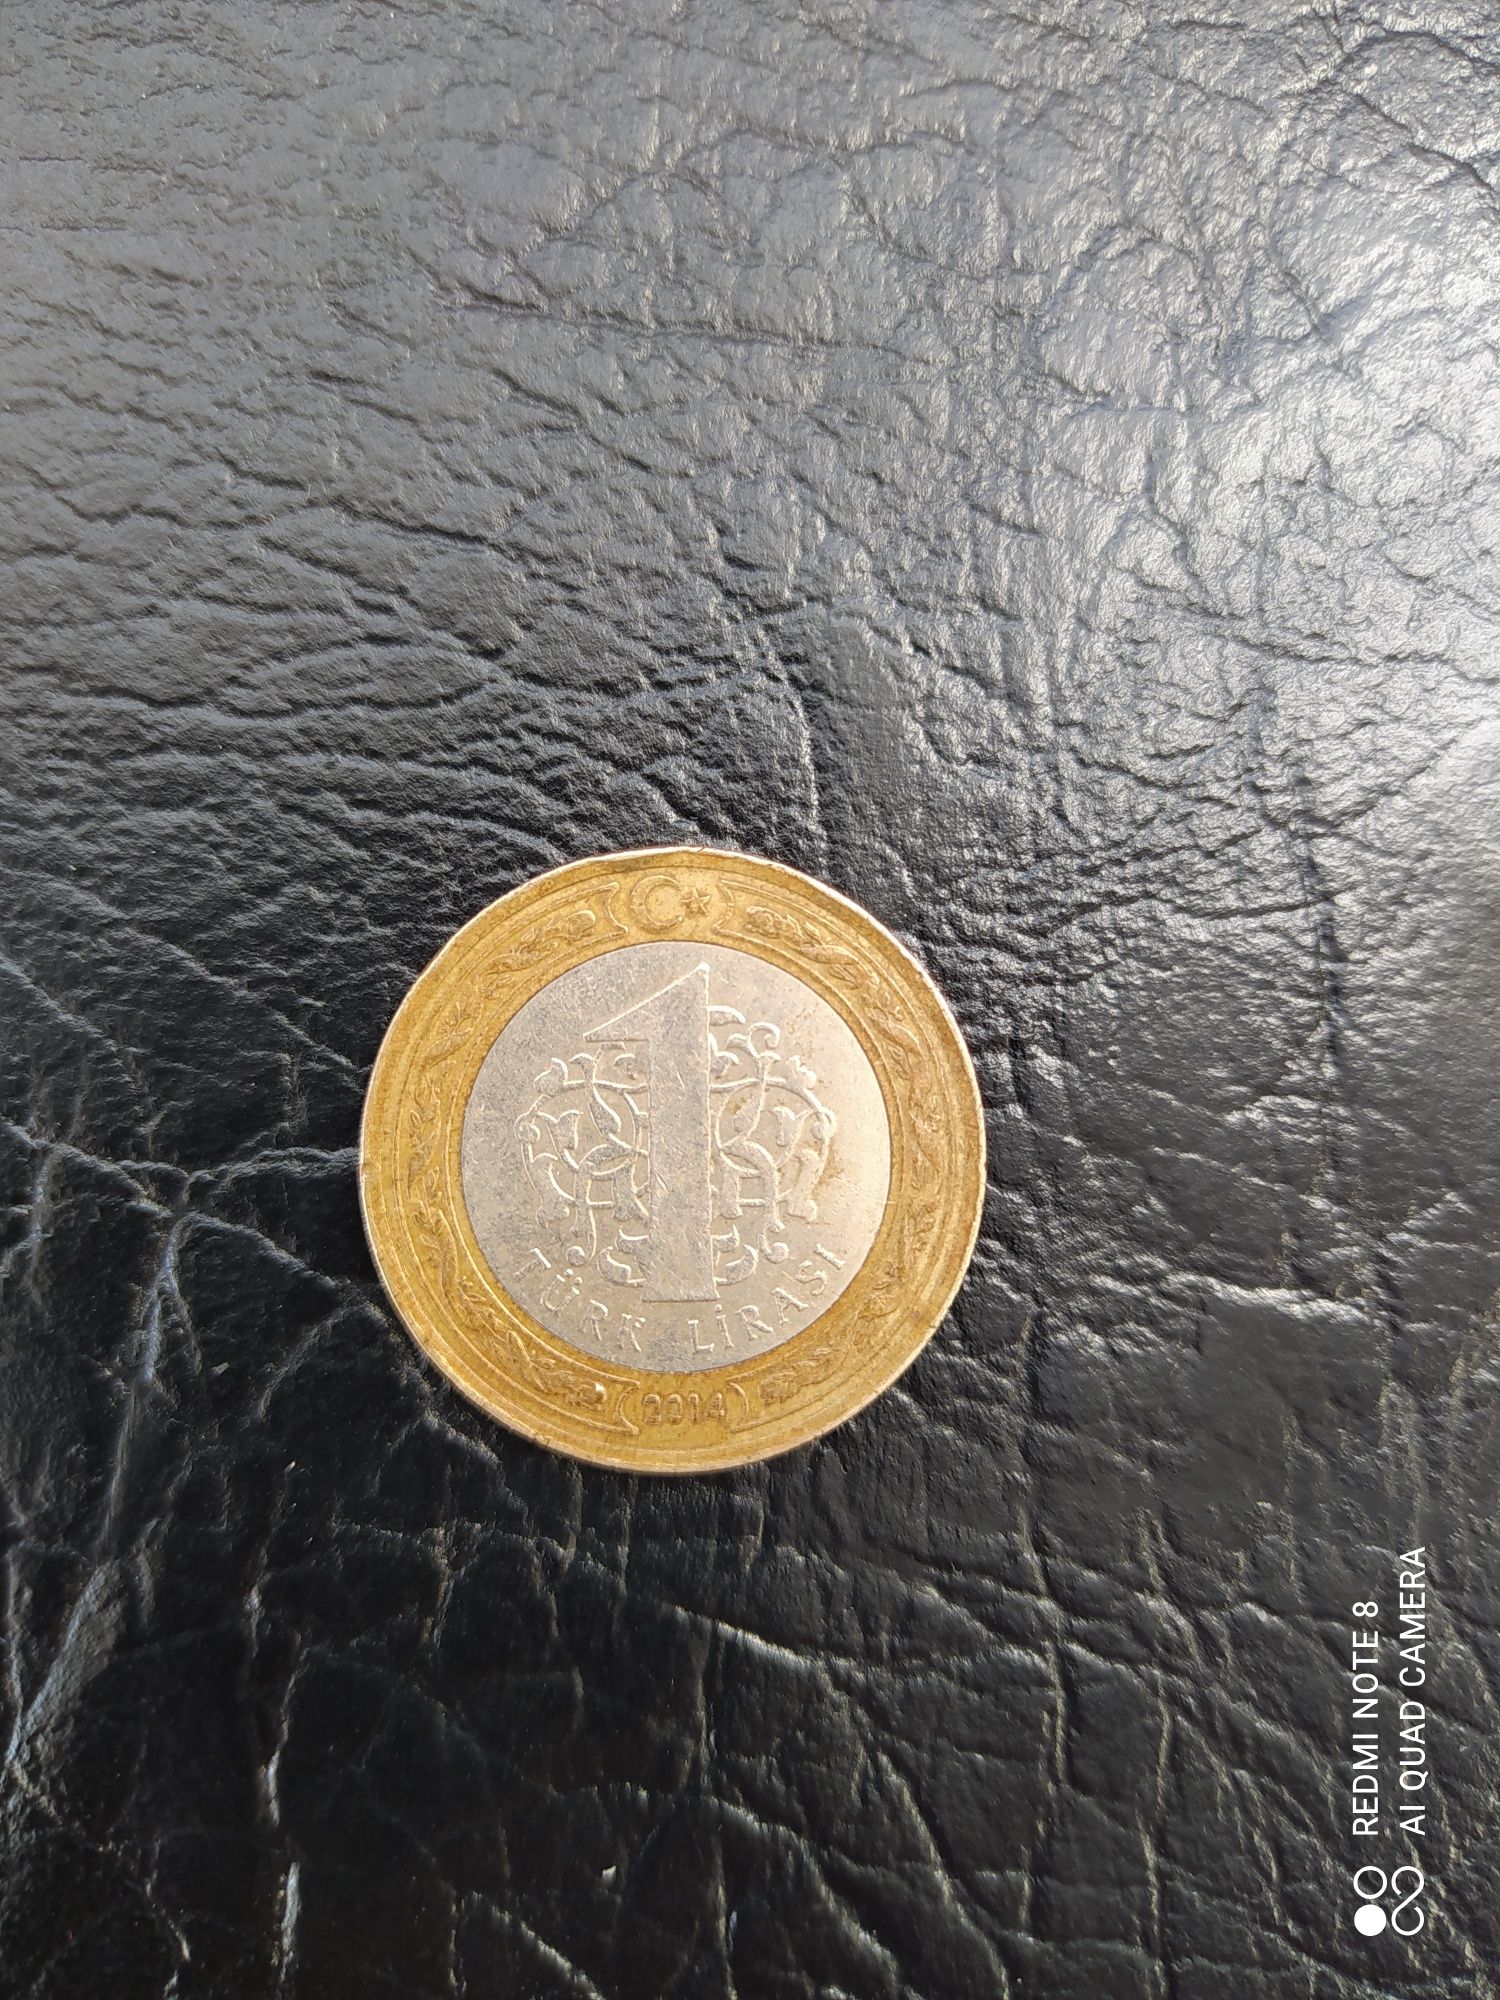 Продам монету турецкая лира